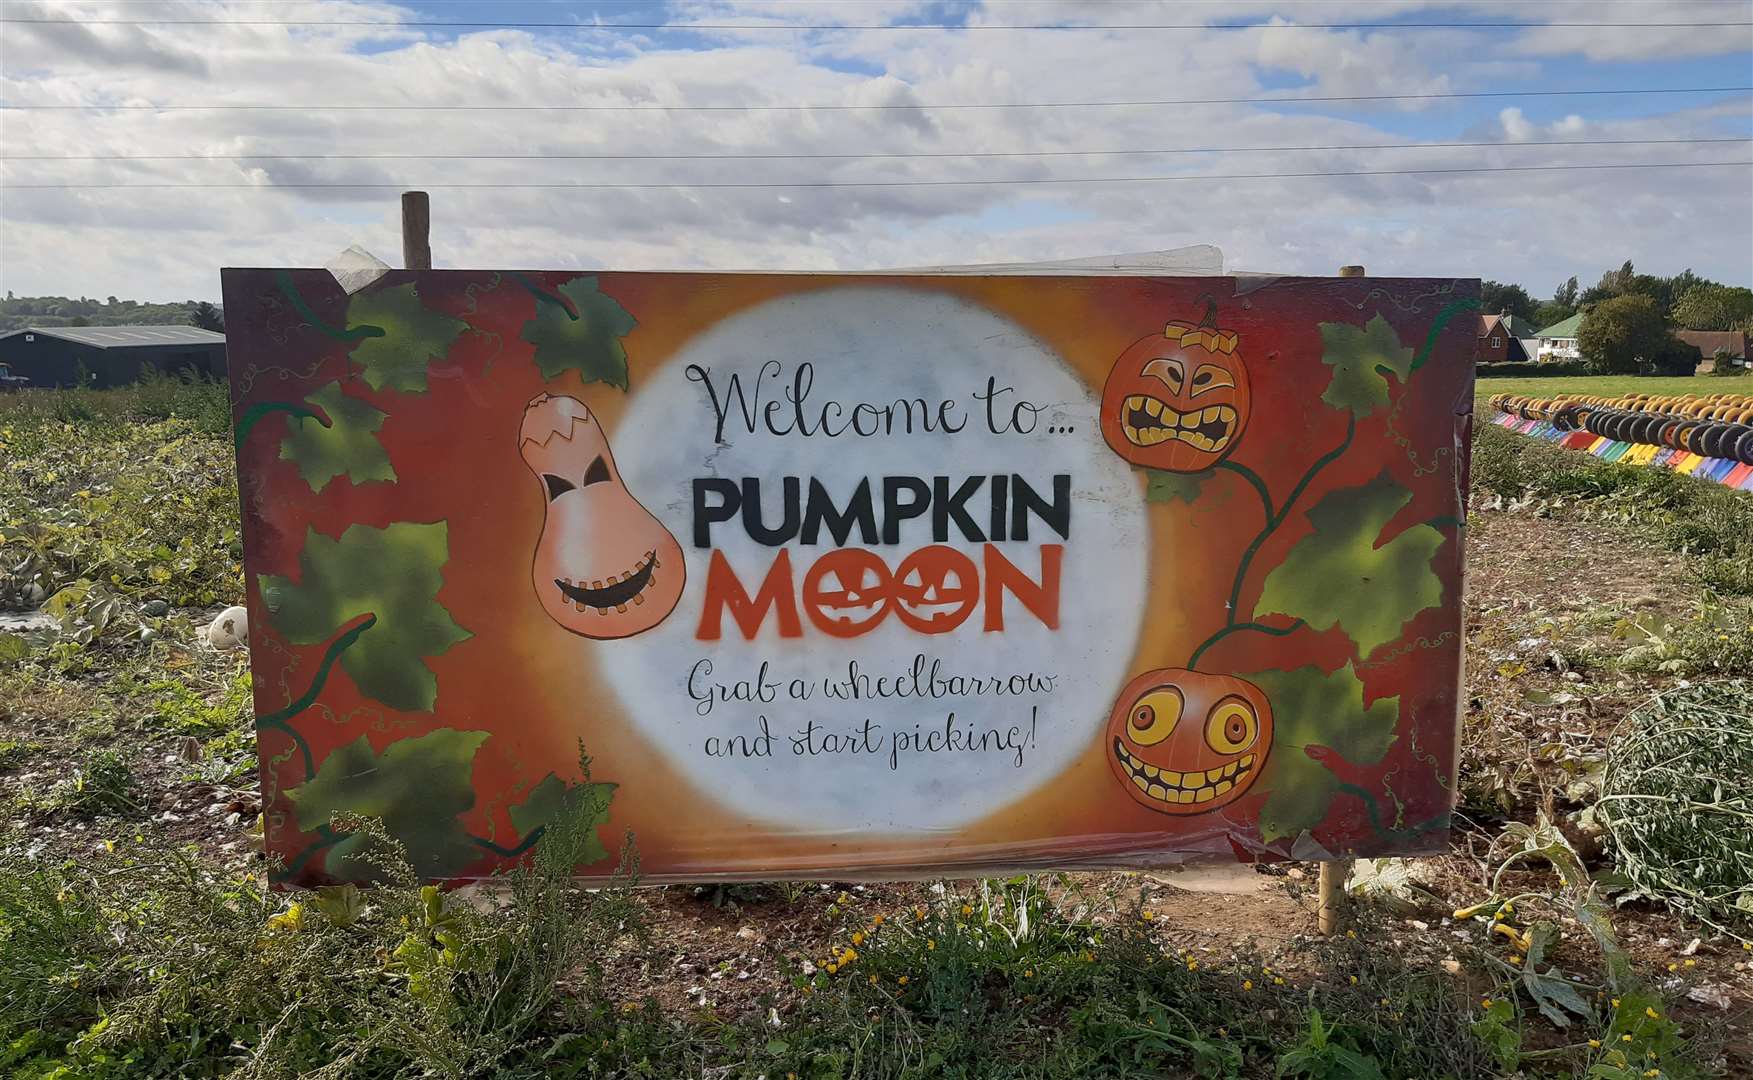 Pumpkin Moon in Sandling, Maidstone, is open every weekend this month